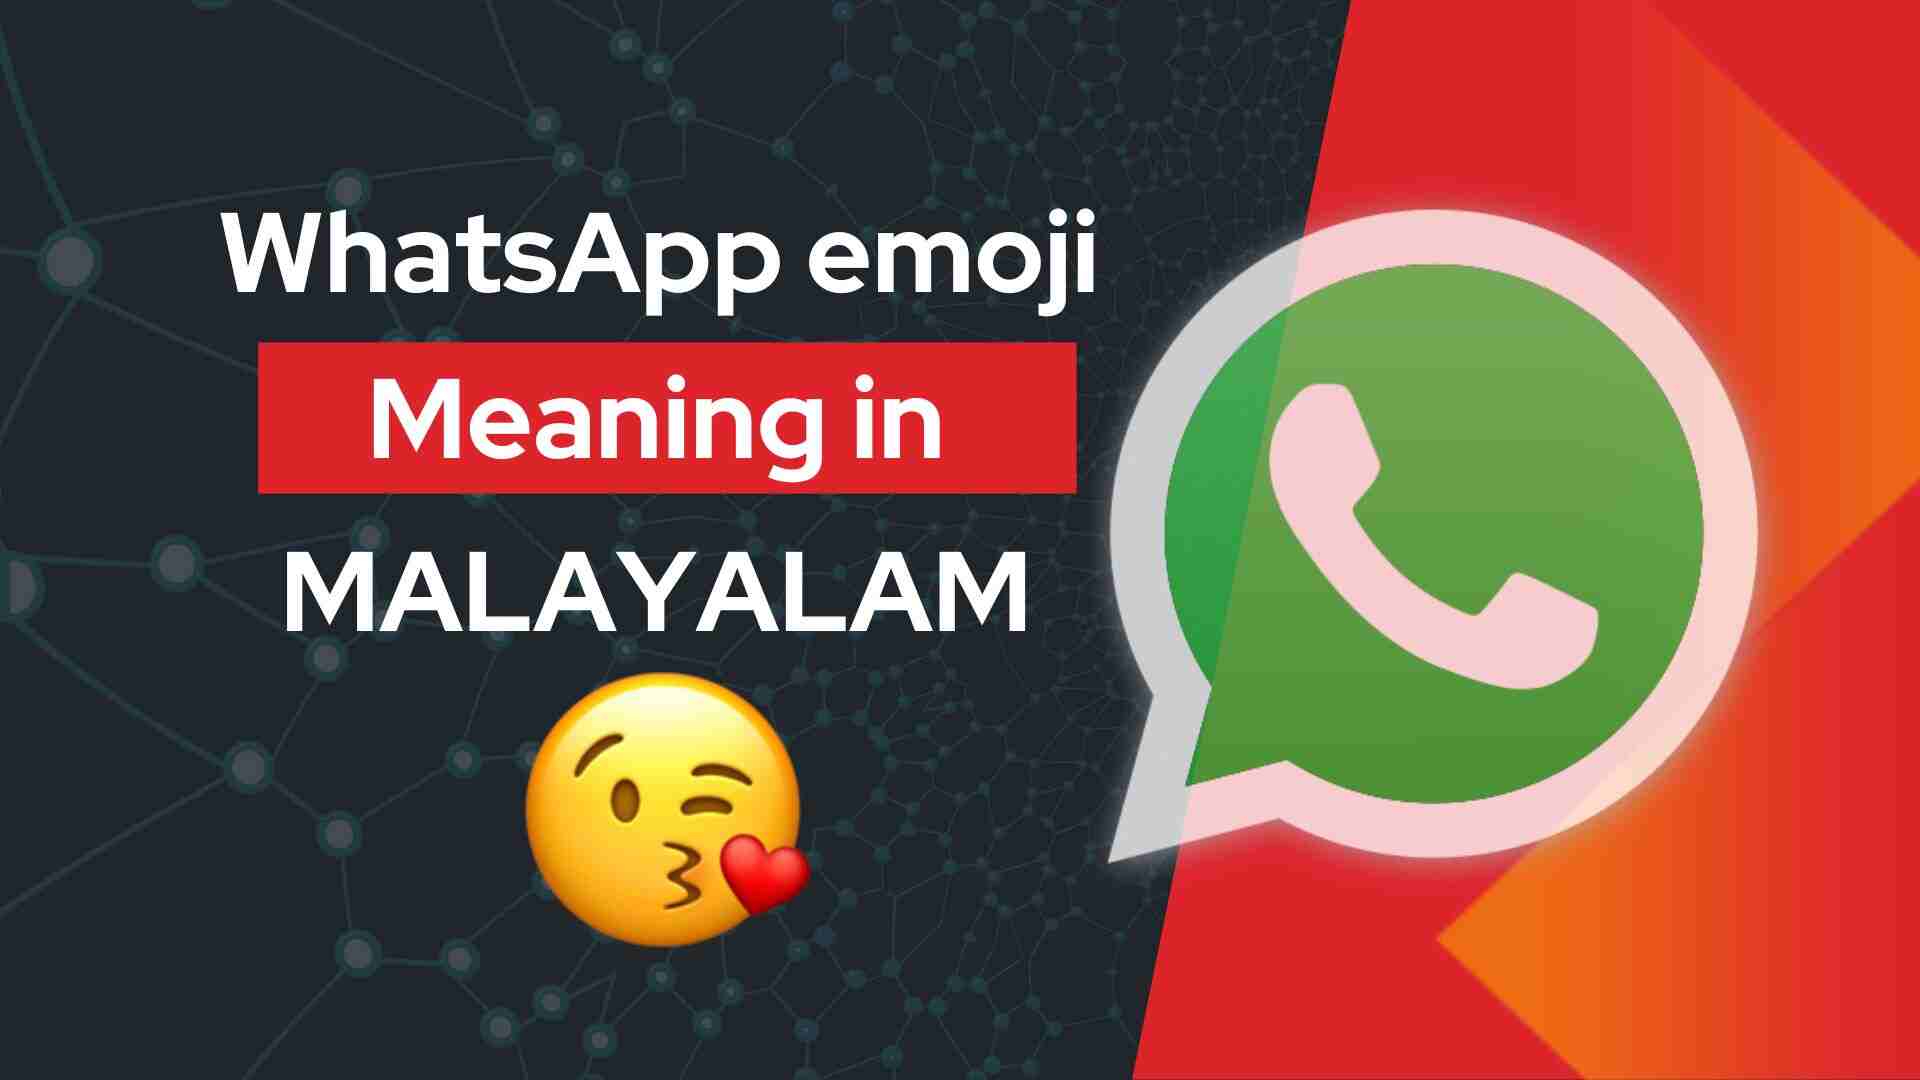 Whatsapp emoji meaning in Malayalam